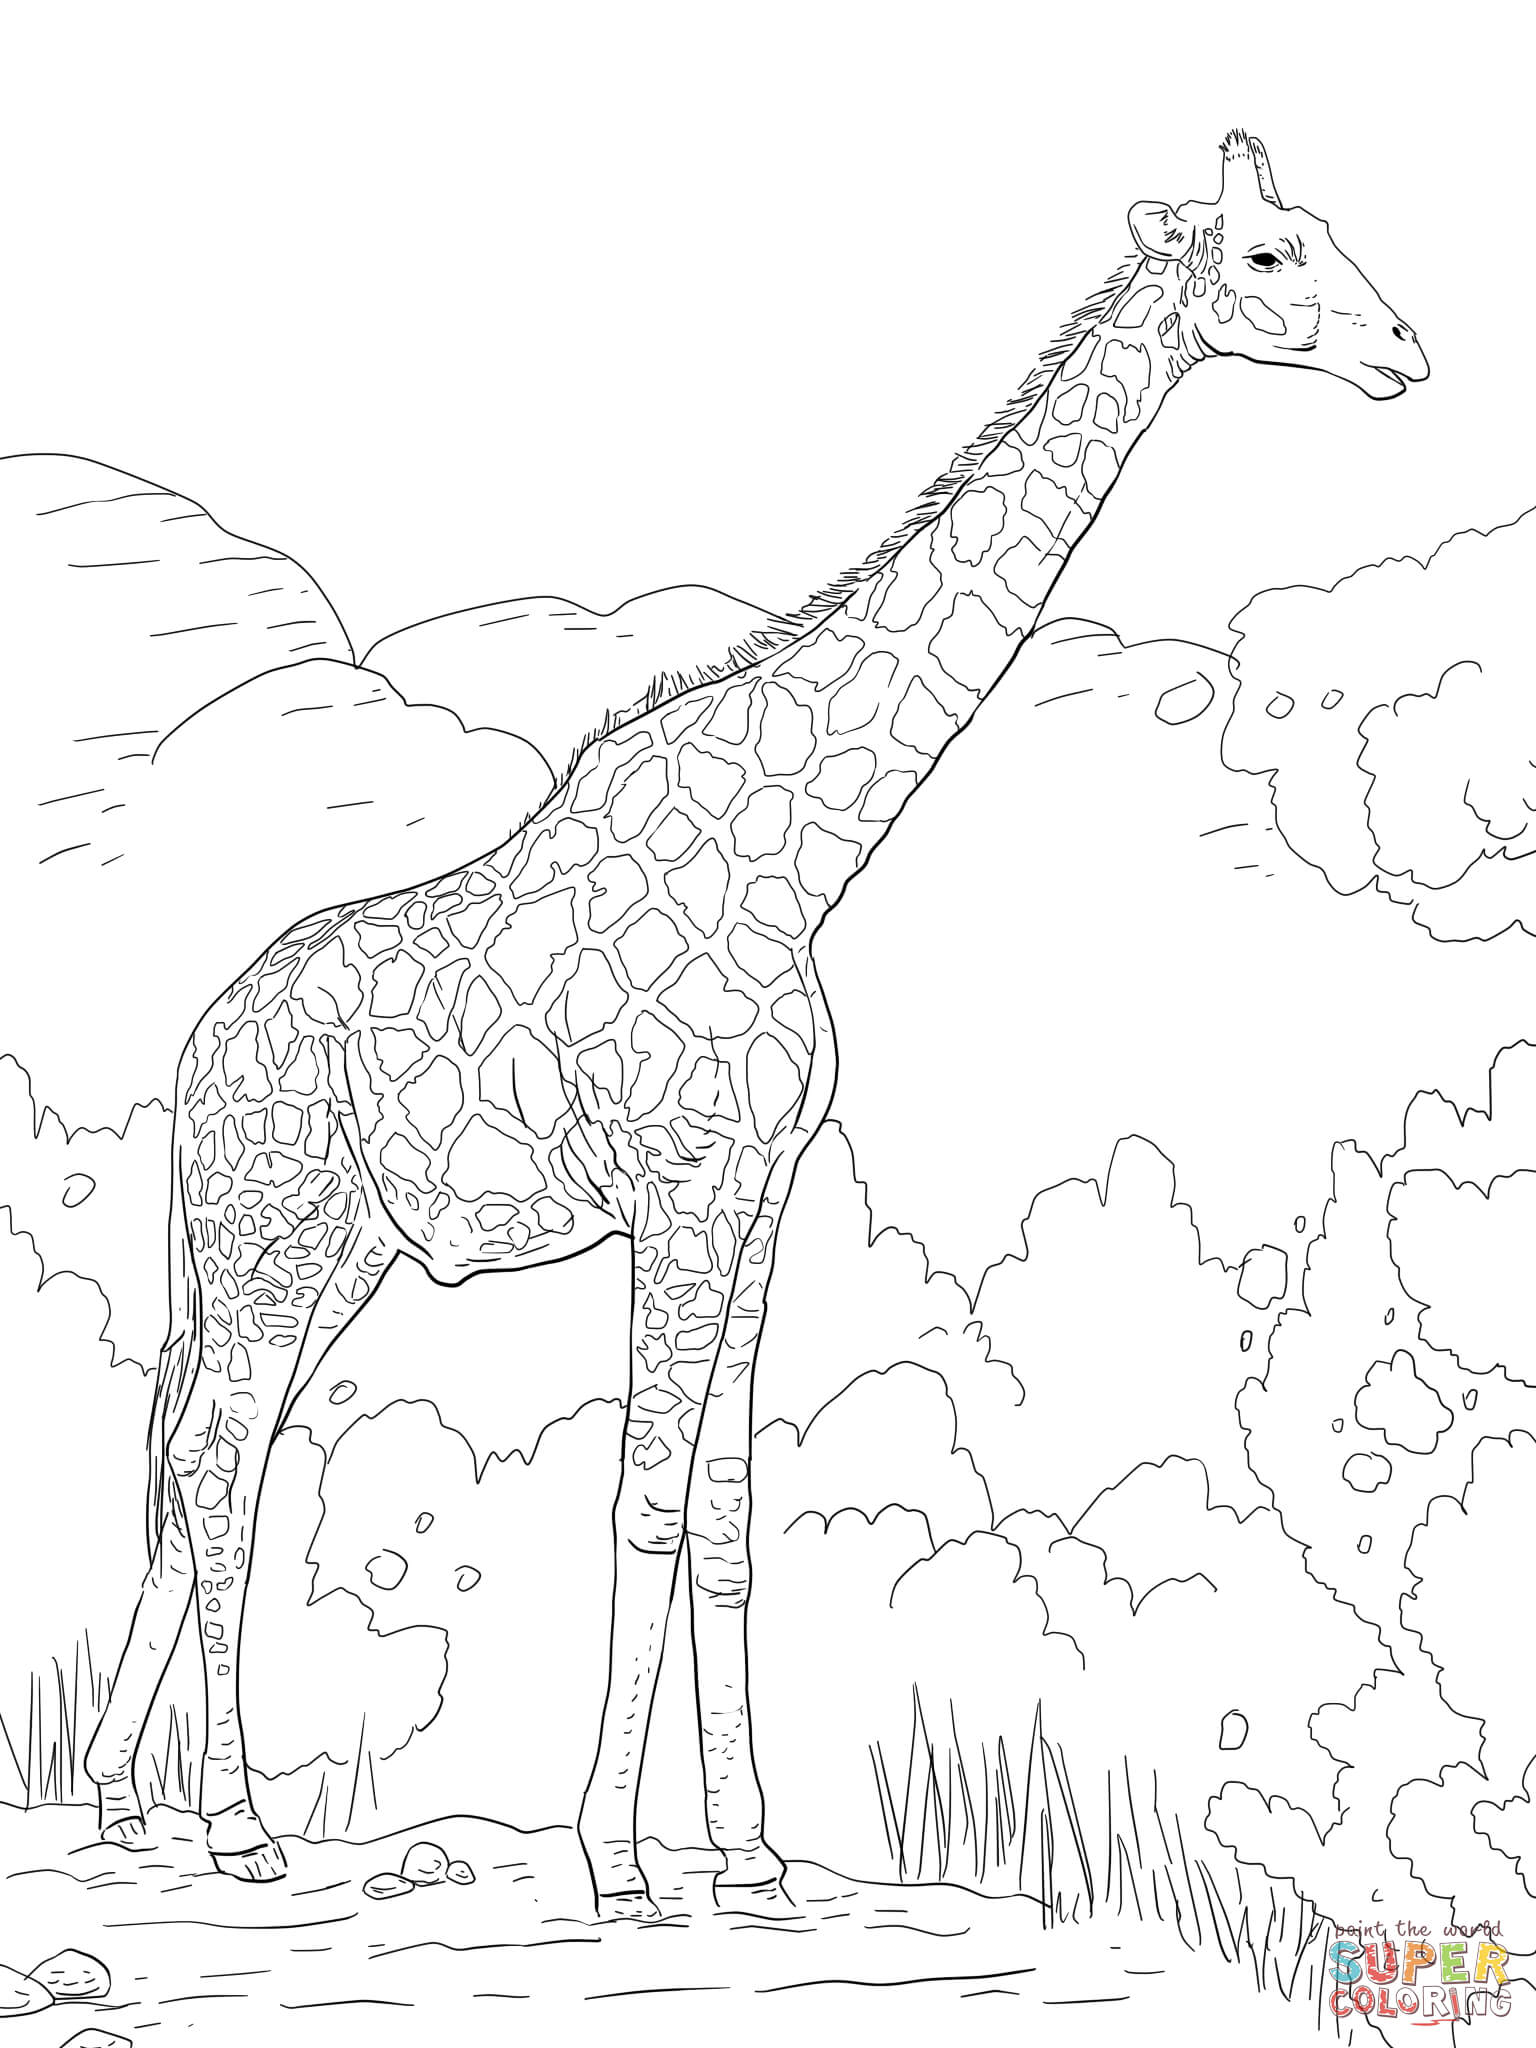 Giraffe Coloring Pages - VoteForVerde.com